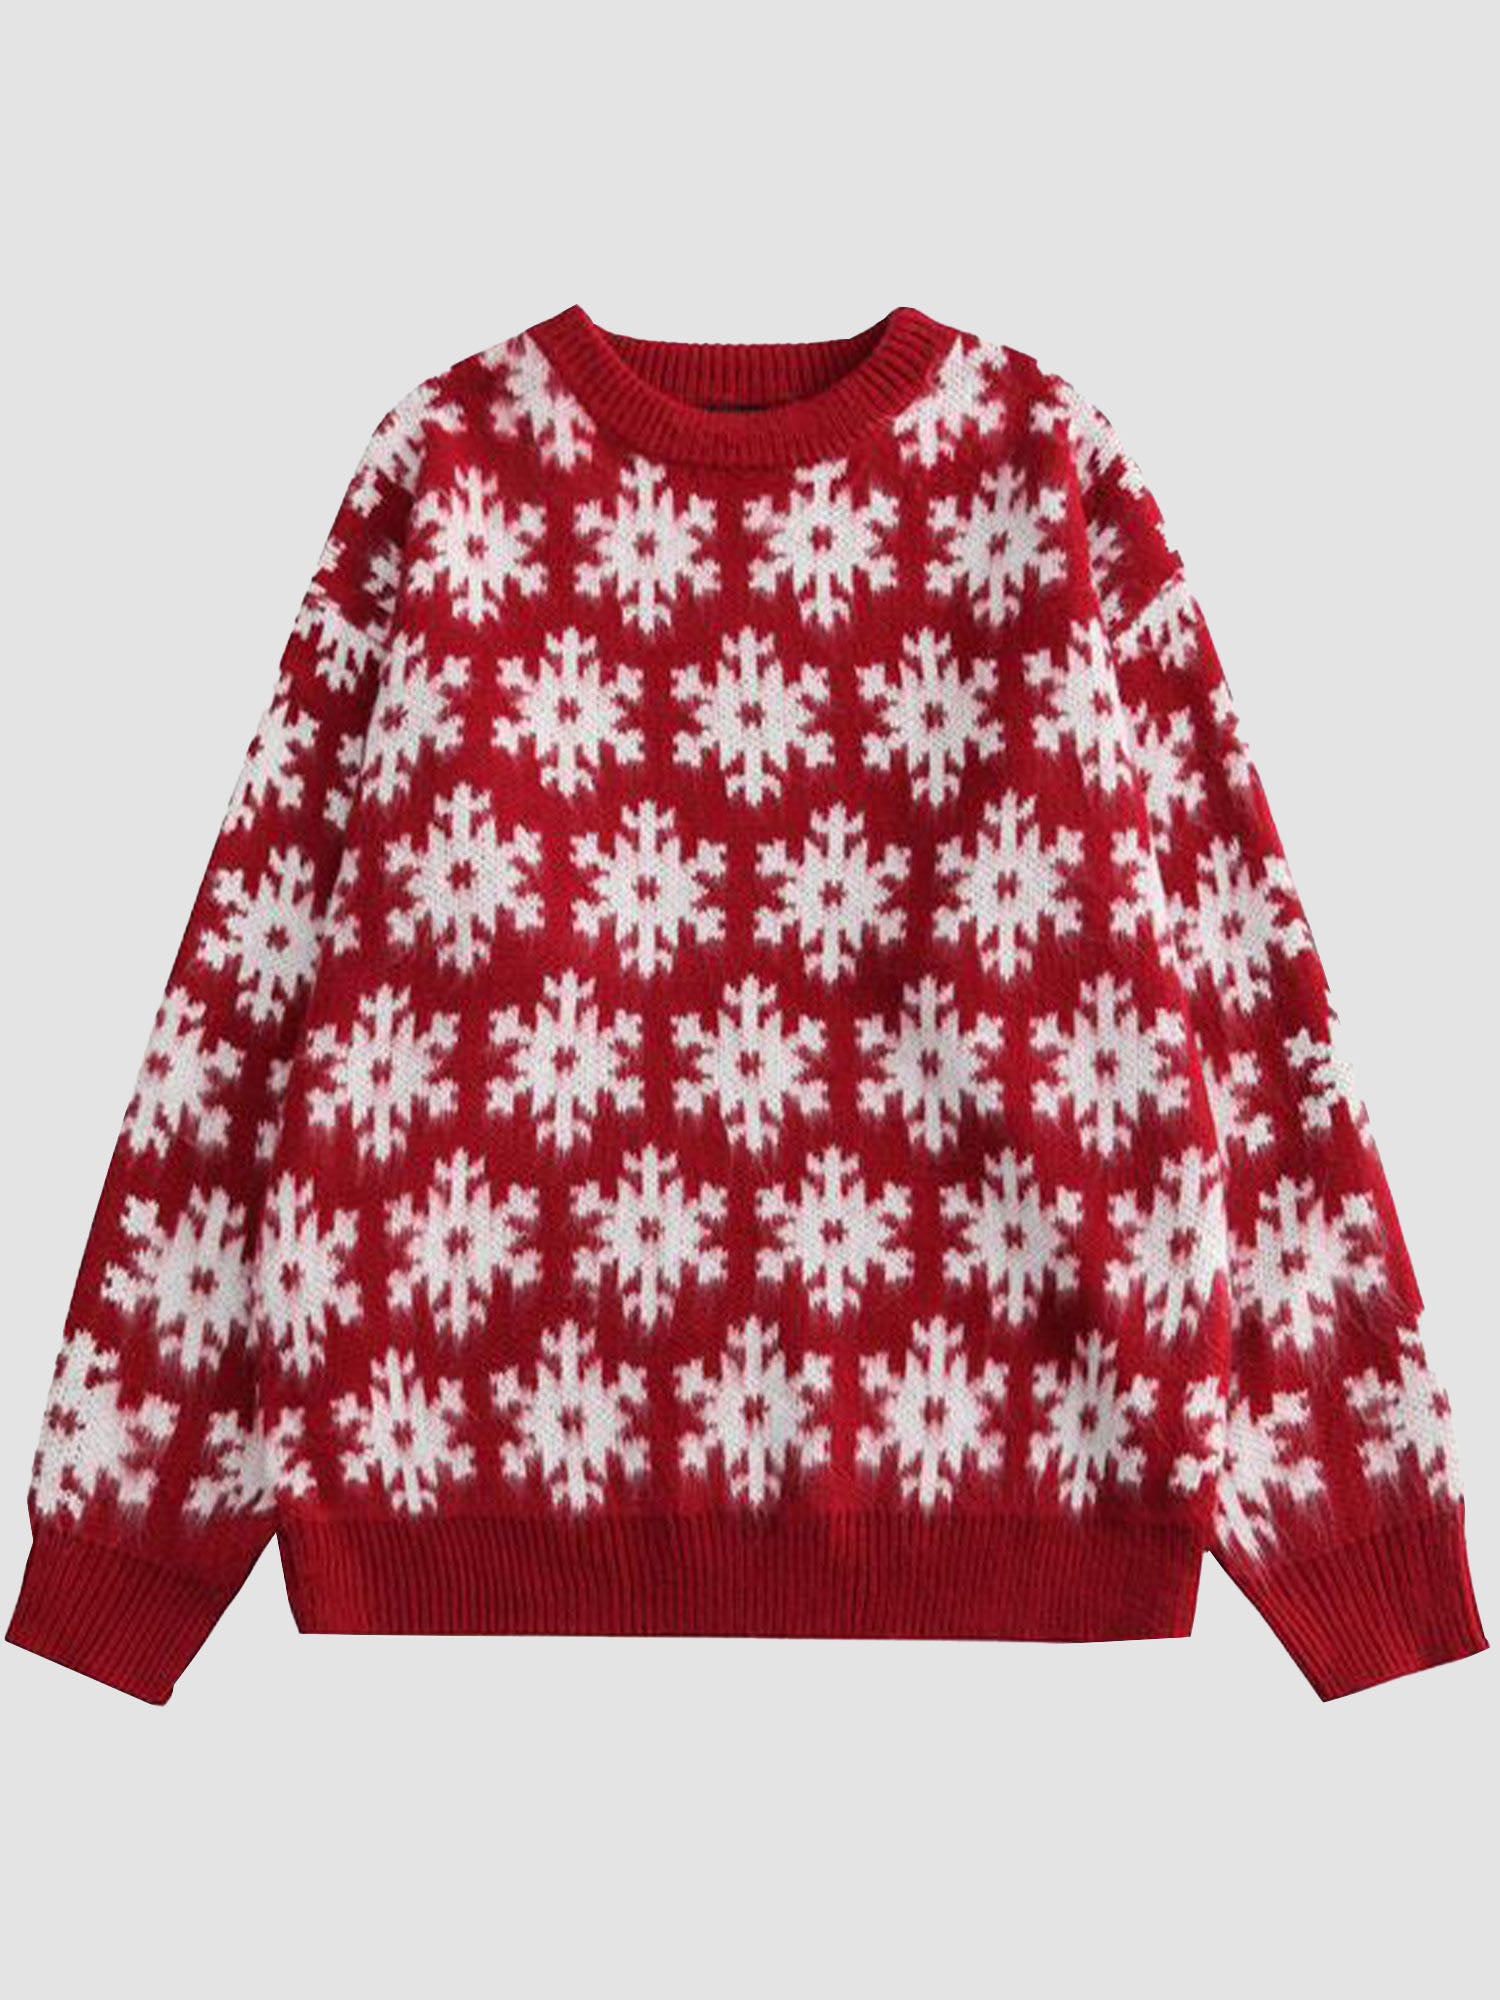 JUSTNOTAG Christmas Fashion Print Acrylic Round Neck Holiday Sweater